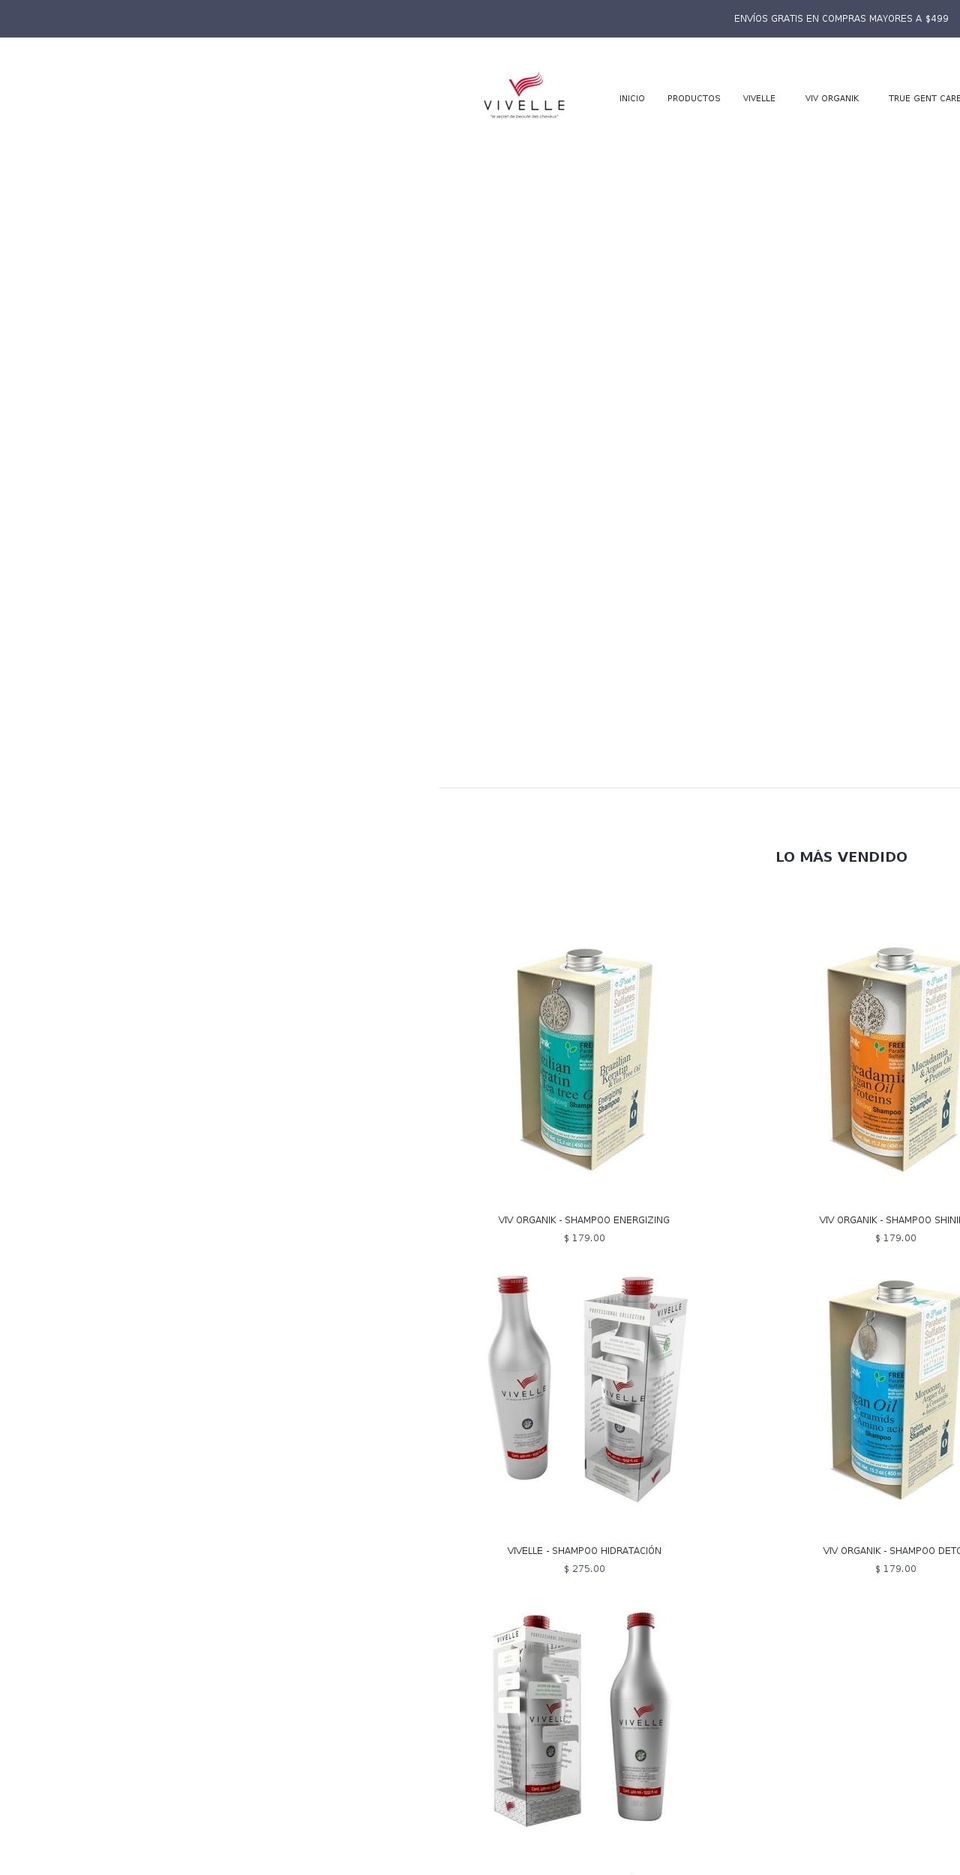 vivelle.mx shopify website screenshot